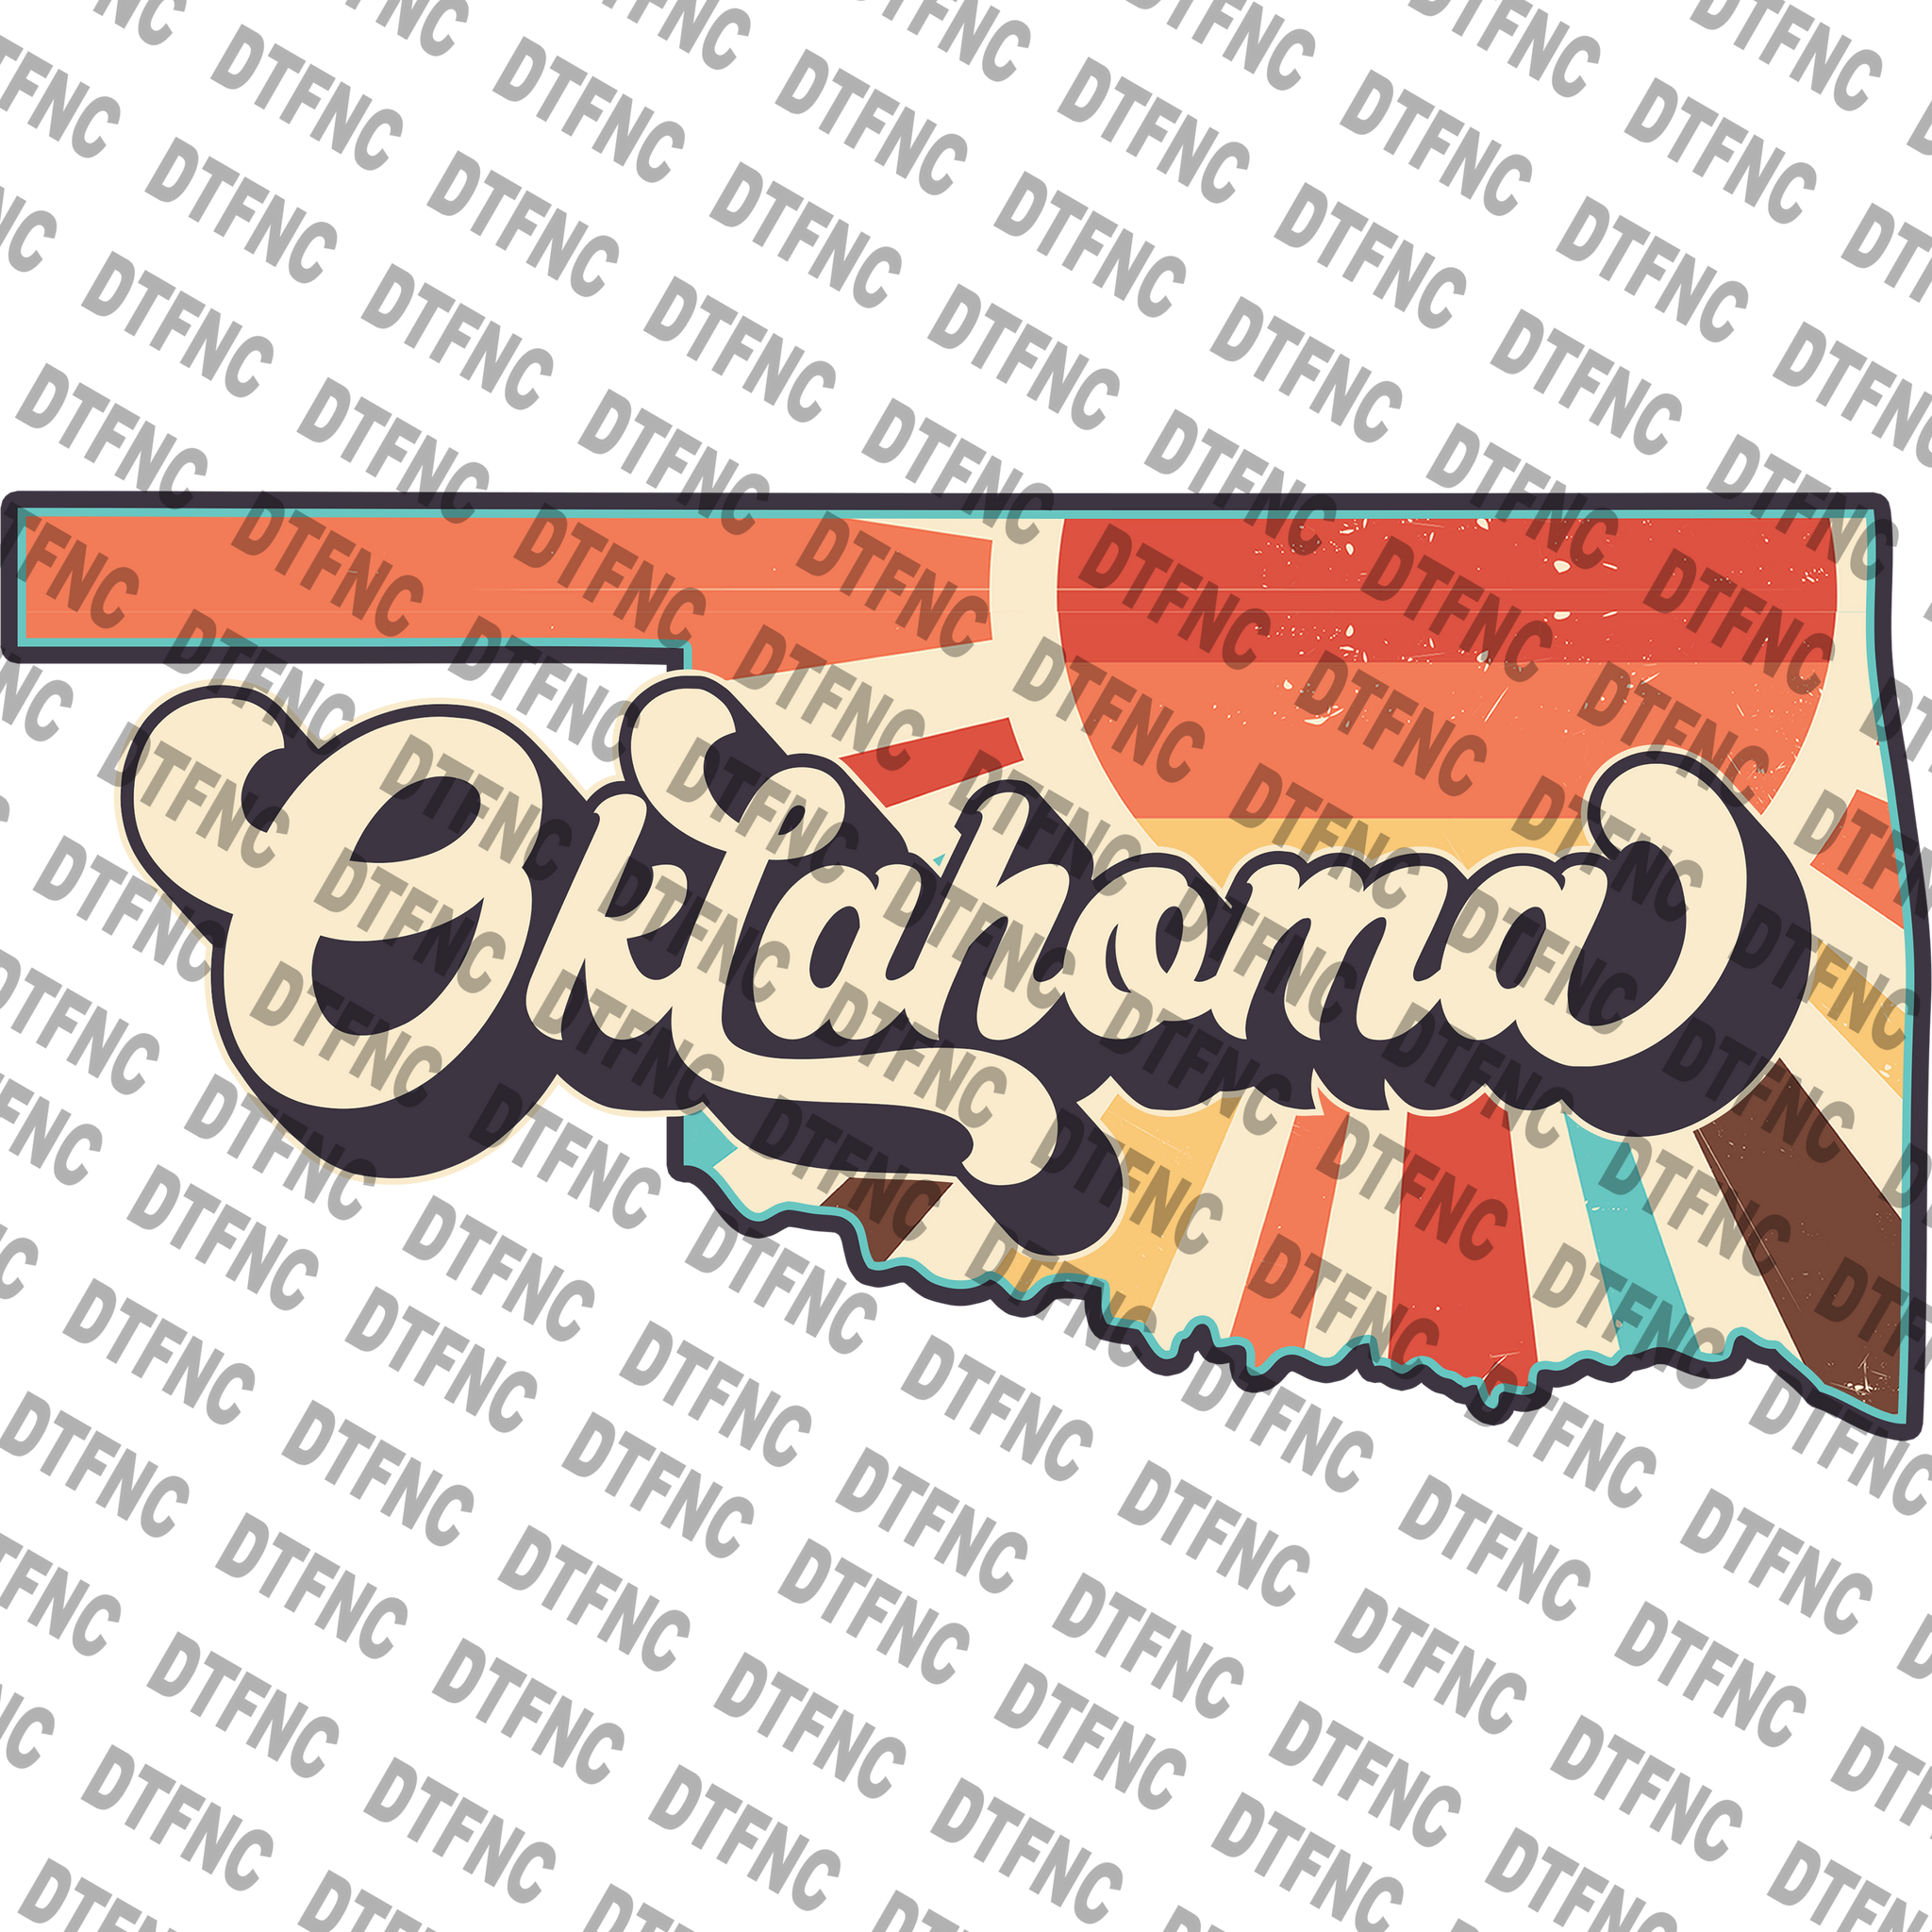 State - Oklahoma